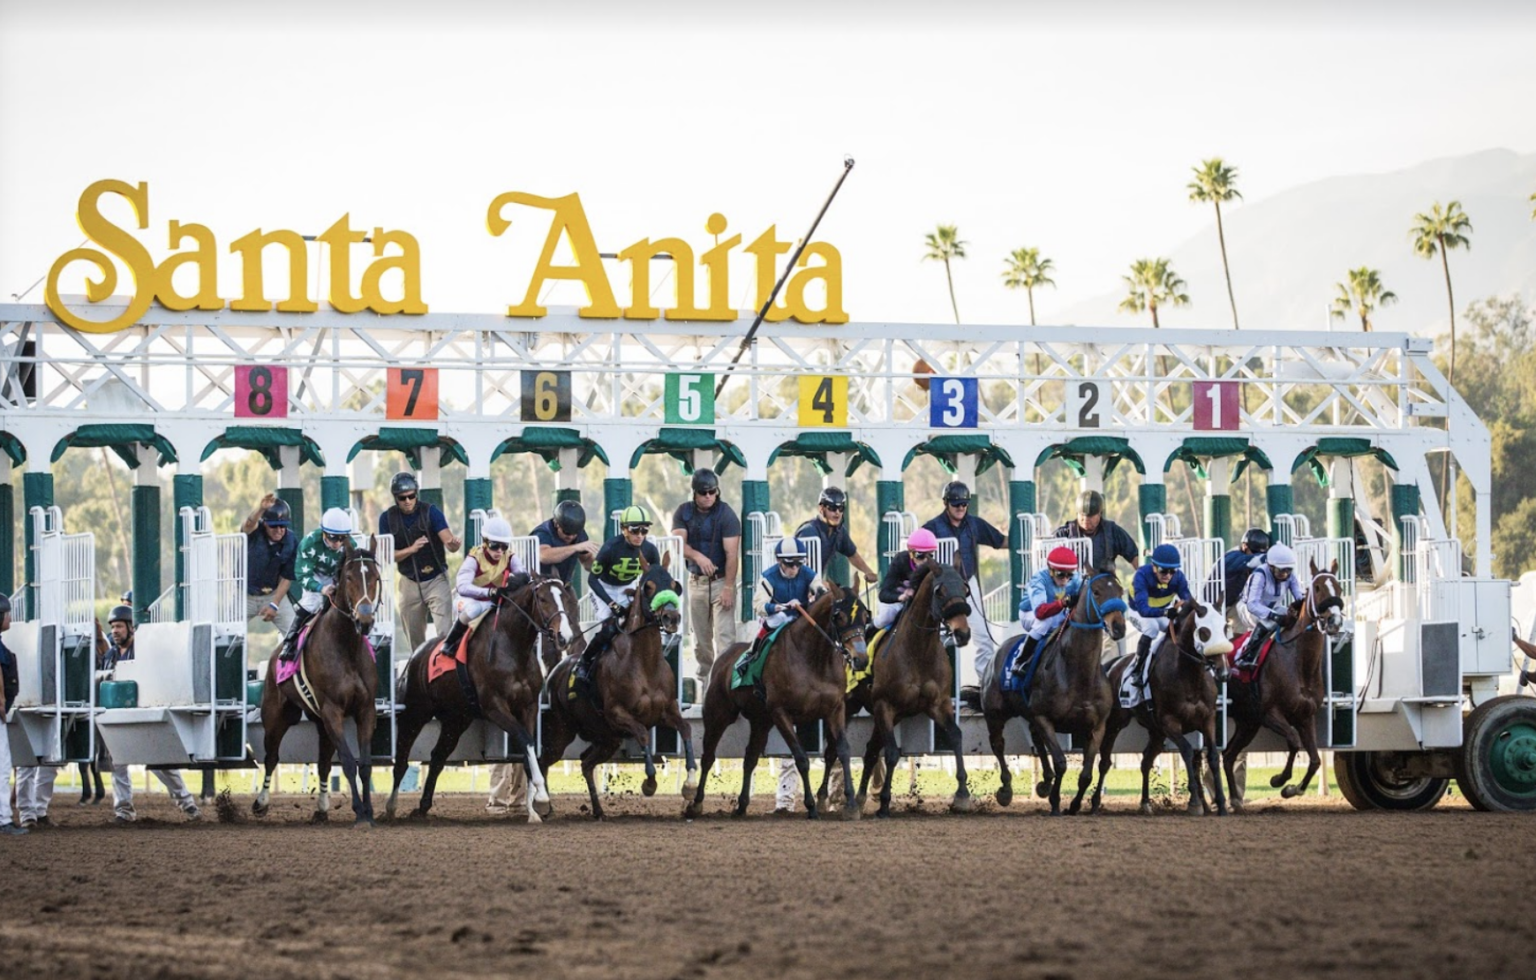 Santa Anita Race Track – Shop SGV – Powered by Monrovia Chamber of Commerce